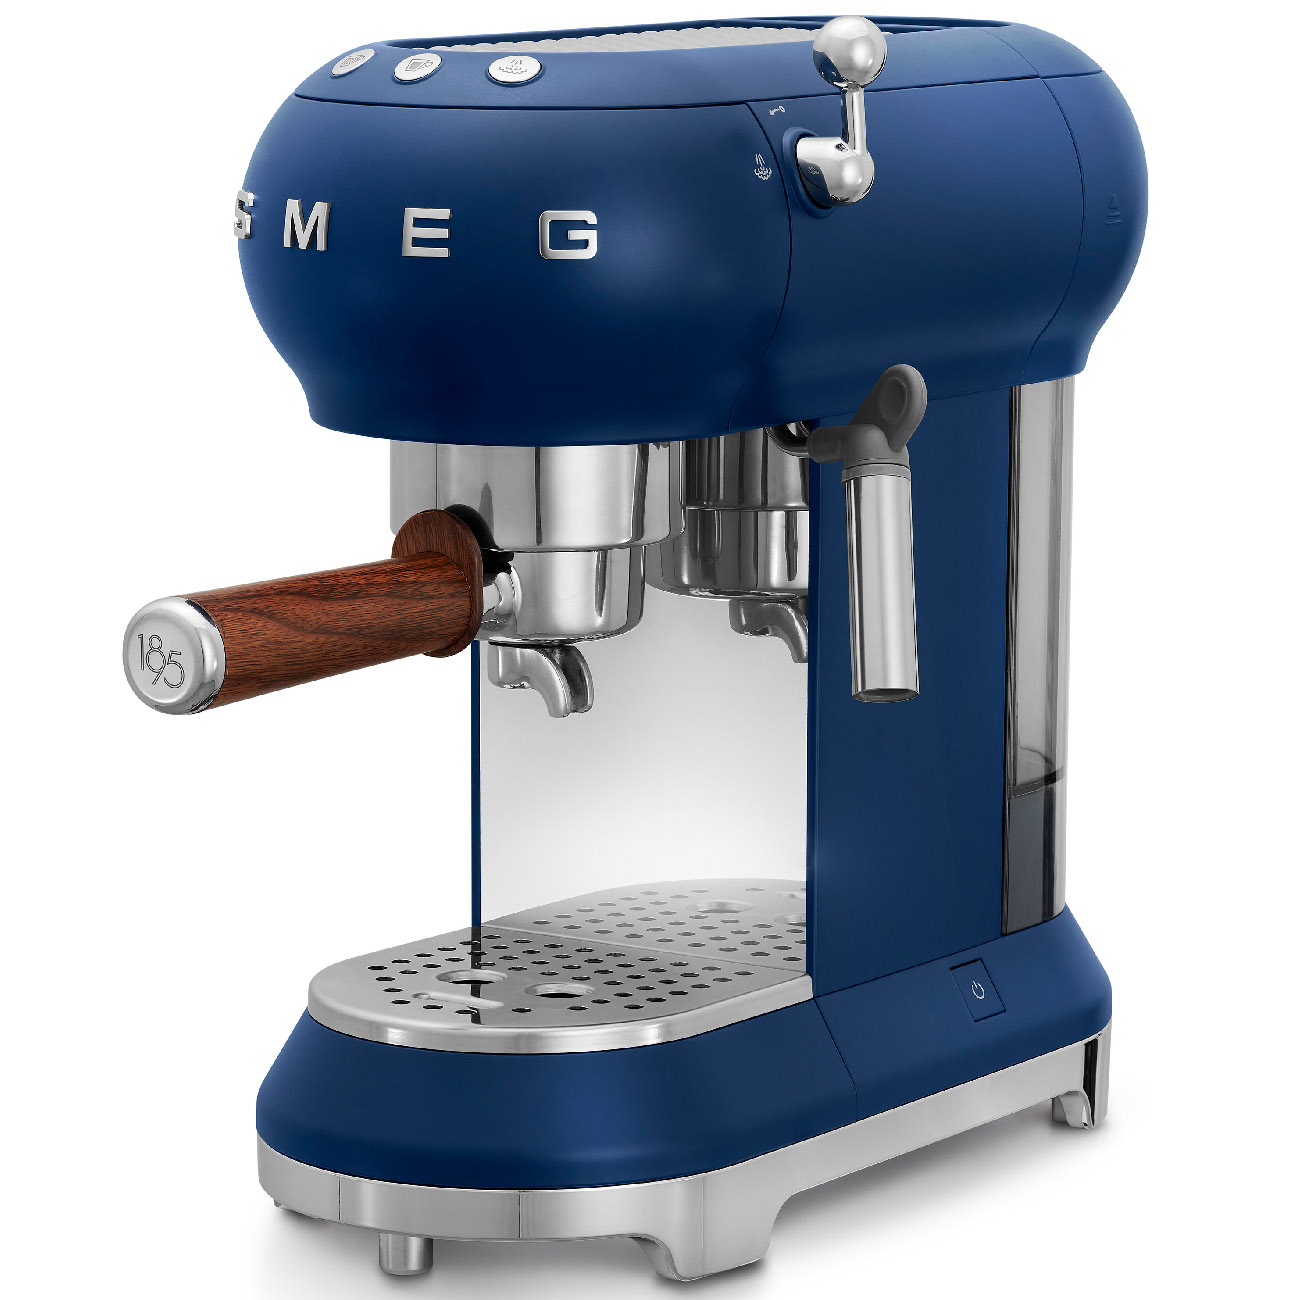 Macchina da caffè espresso Blu - Lavazza 1895 Smeg_4